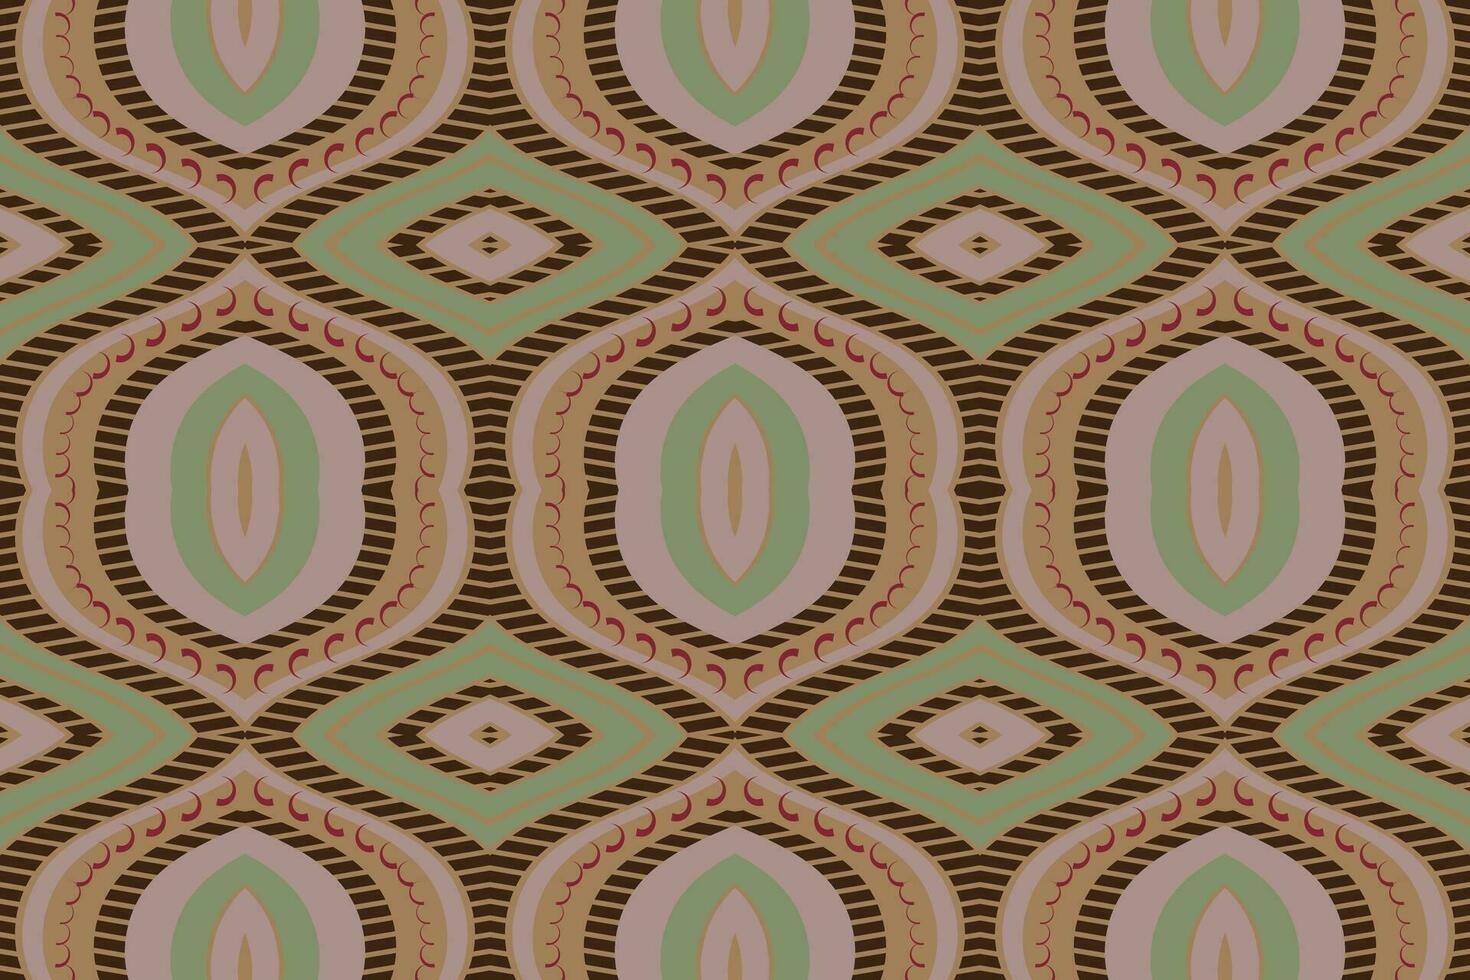 ikat damasco cachemir bordado antecedentes. ikat vector geométrico étnico oriental modelo tradicional. ikat azteca estilo resumen diseño para impresión textura,tela,sari,sari,alfombra.